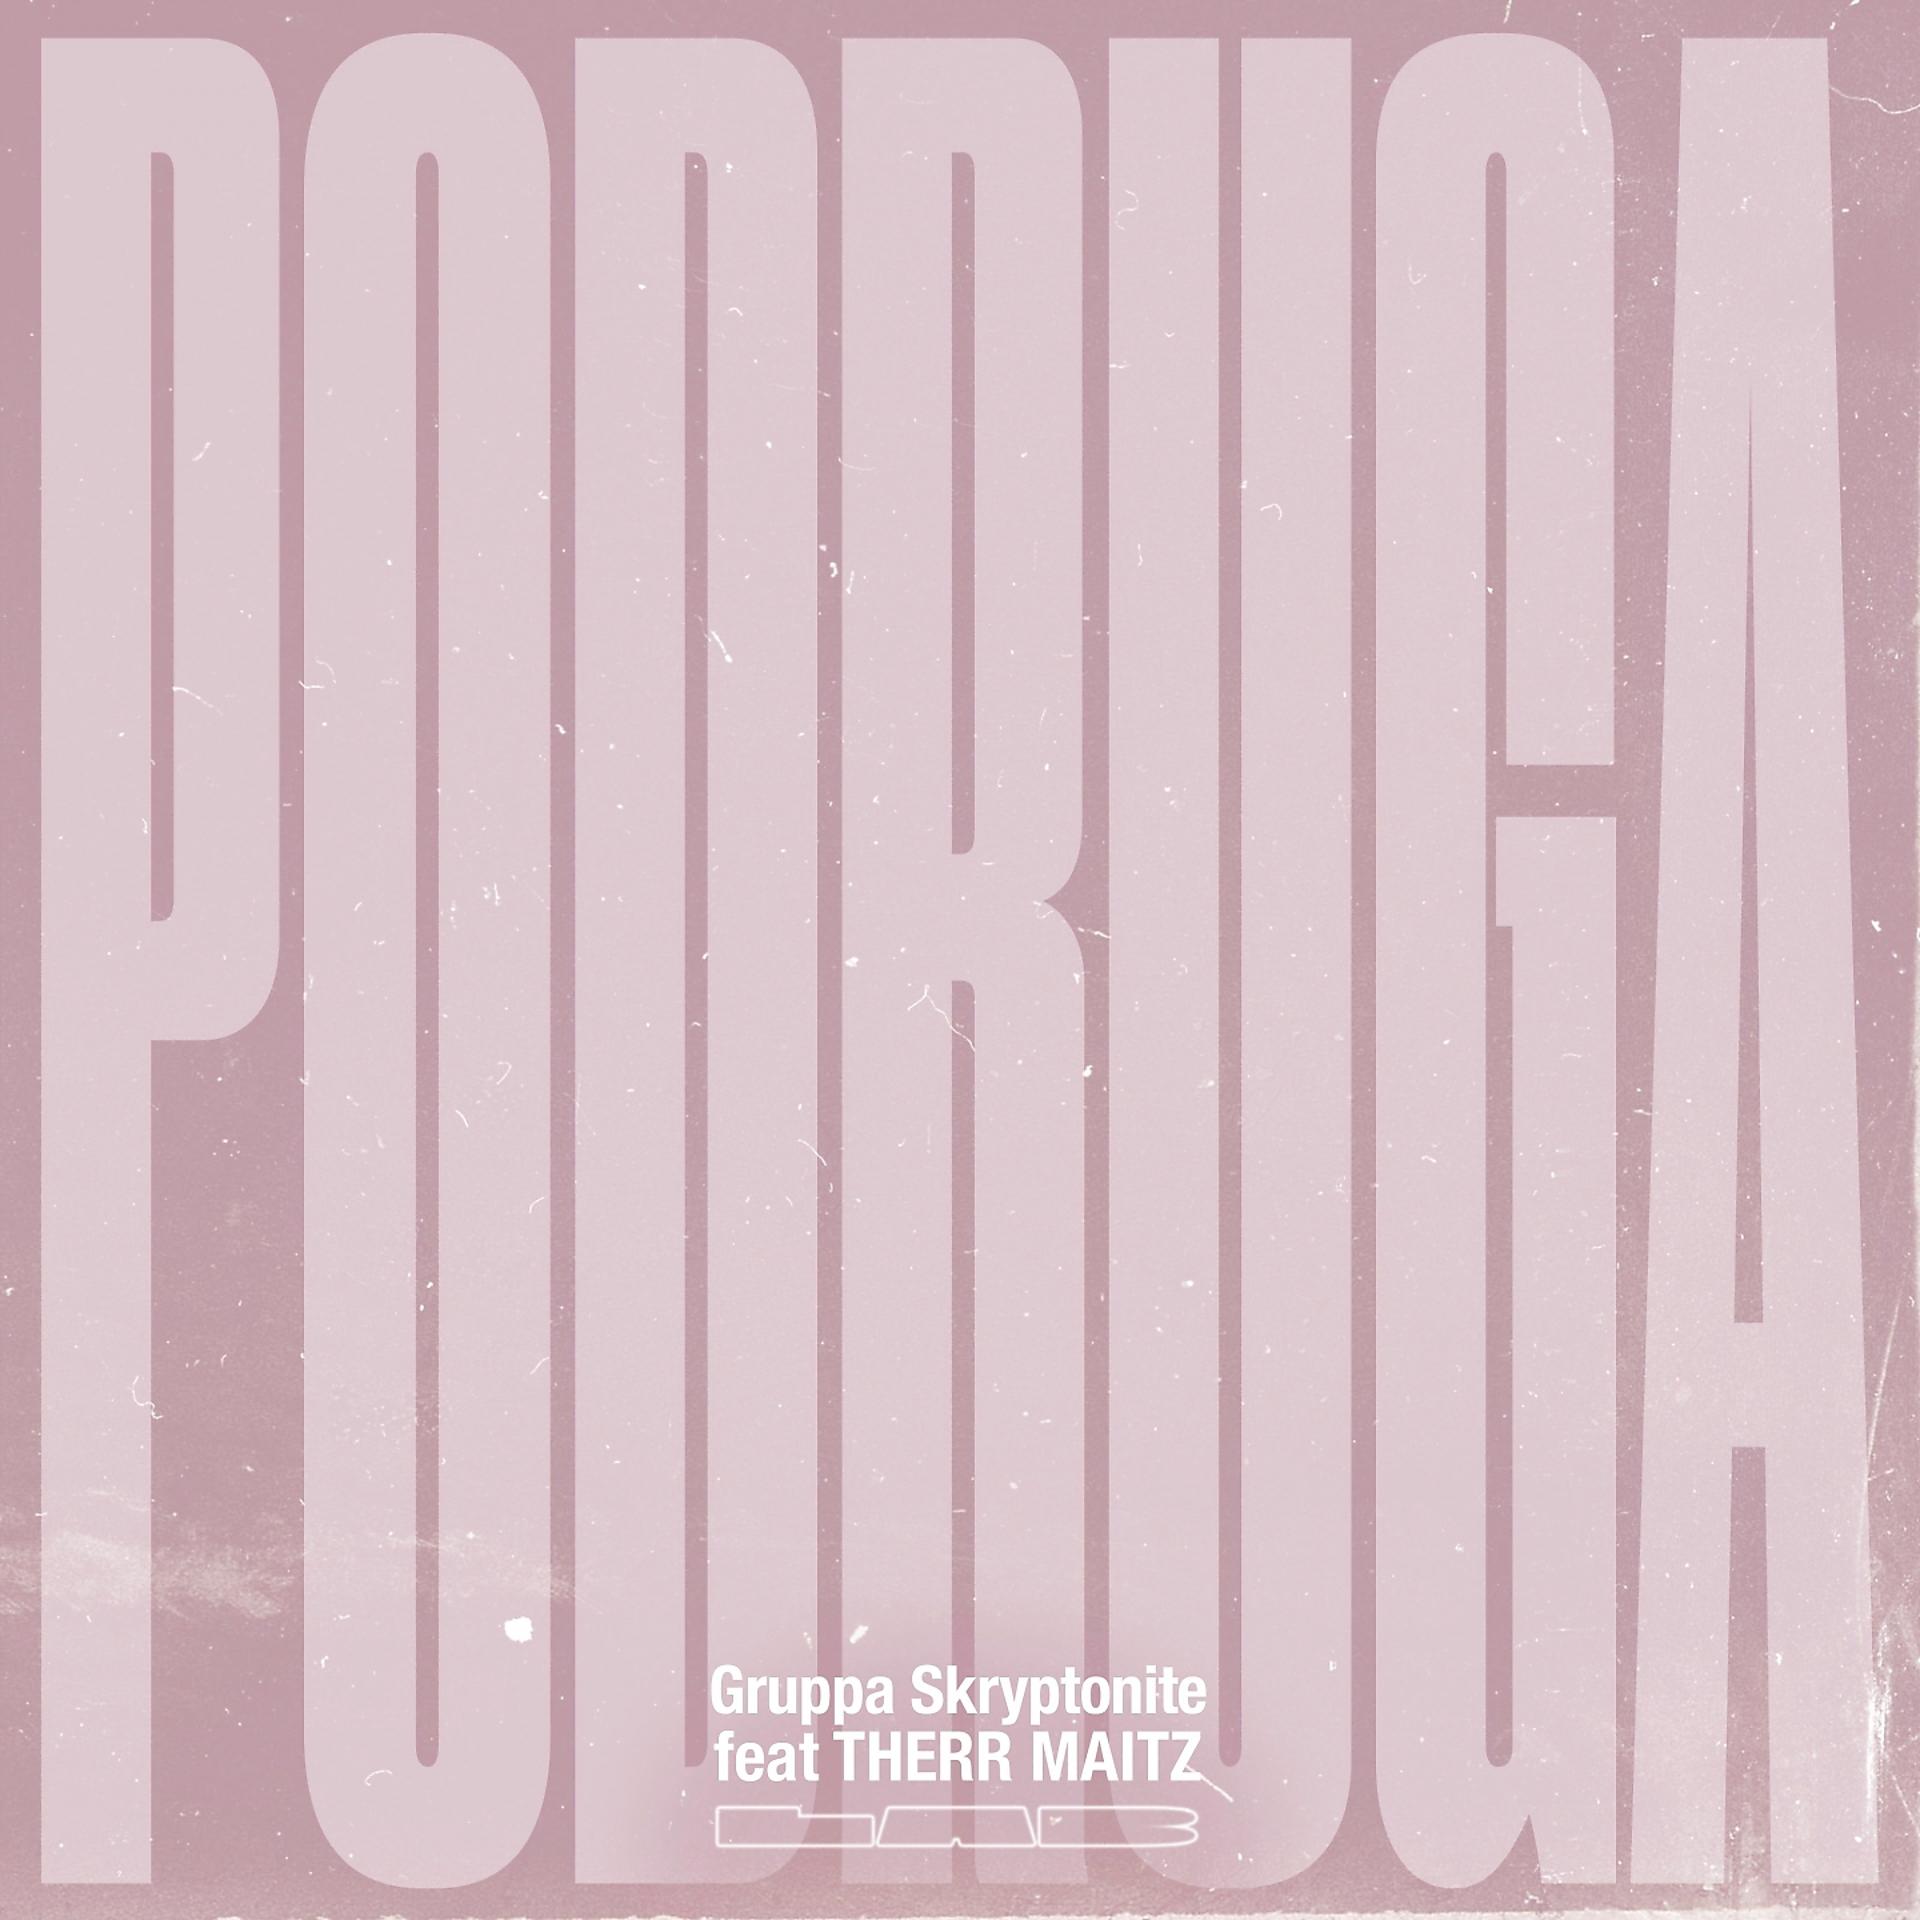 Постер альбома Podruga